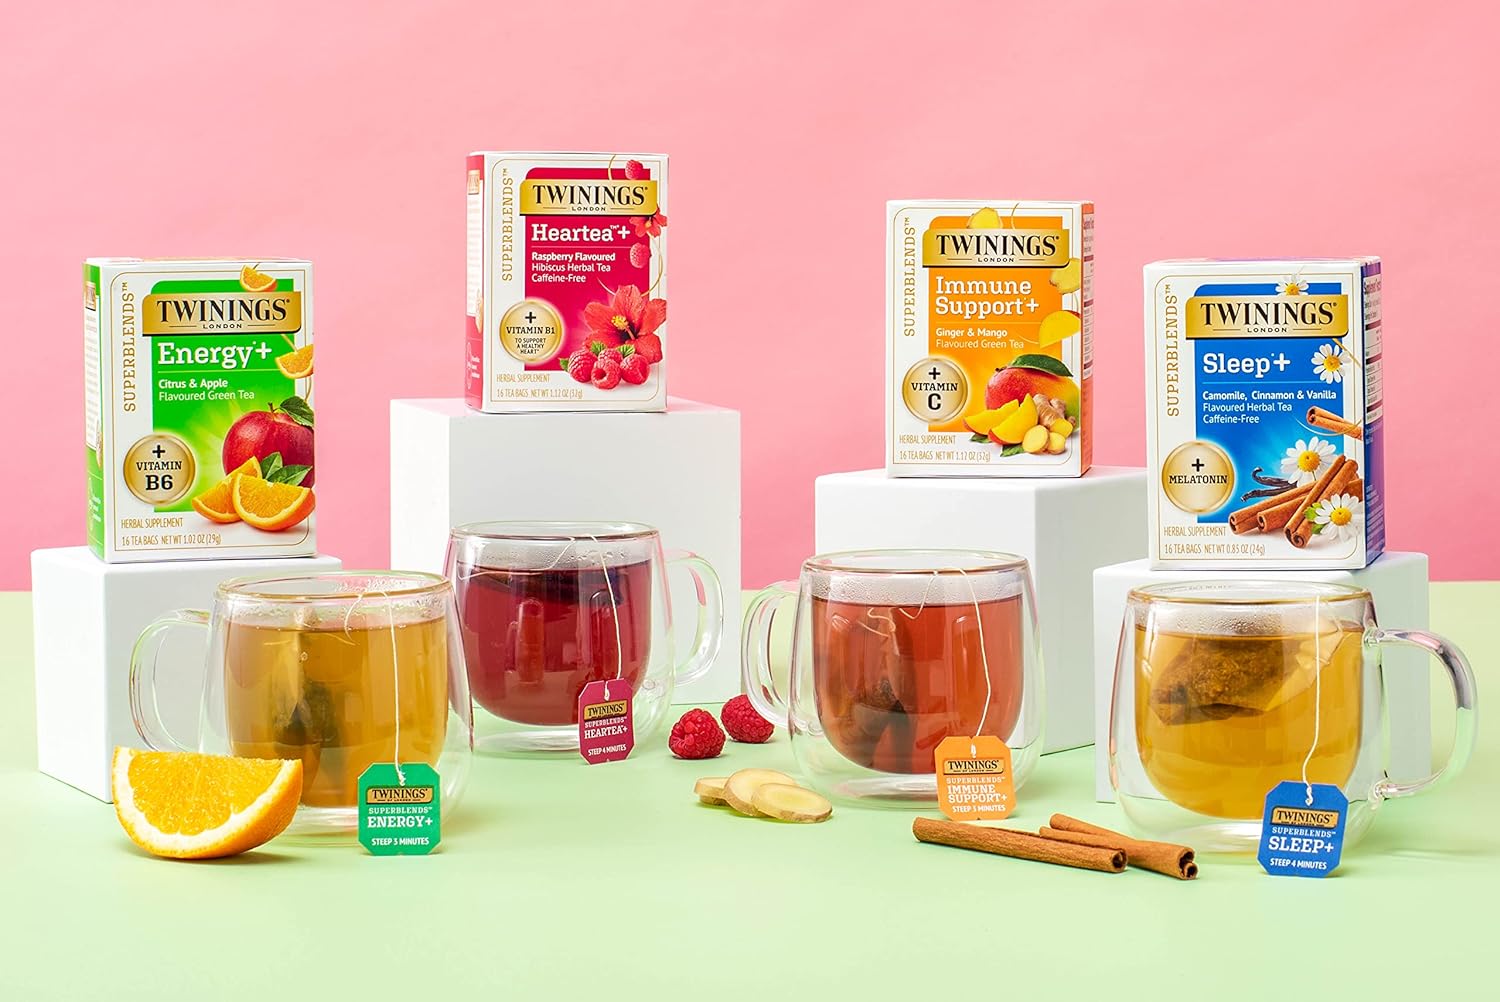 Twinings Superblends Energy+ Herbal Tea with Vitamin B6, Citrus & Apple Caffeine-Free Green Tea, 16 Tea Bags (Pack of 6), Enjoy Hot or Iced : Grocery & Gourmet Food